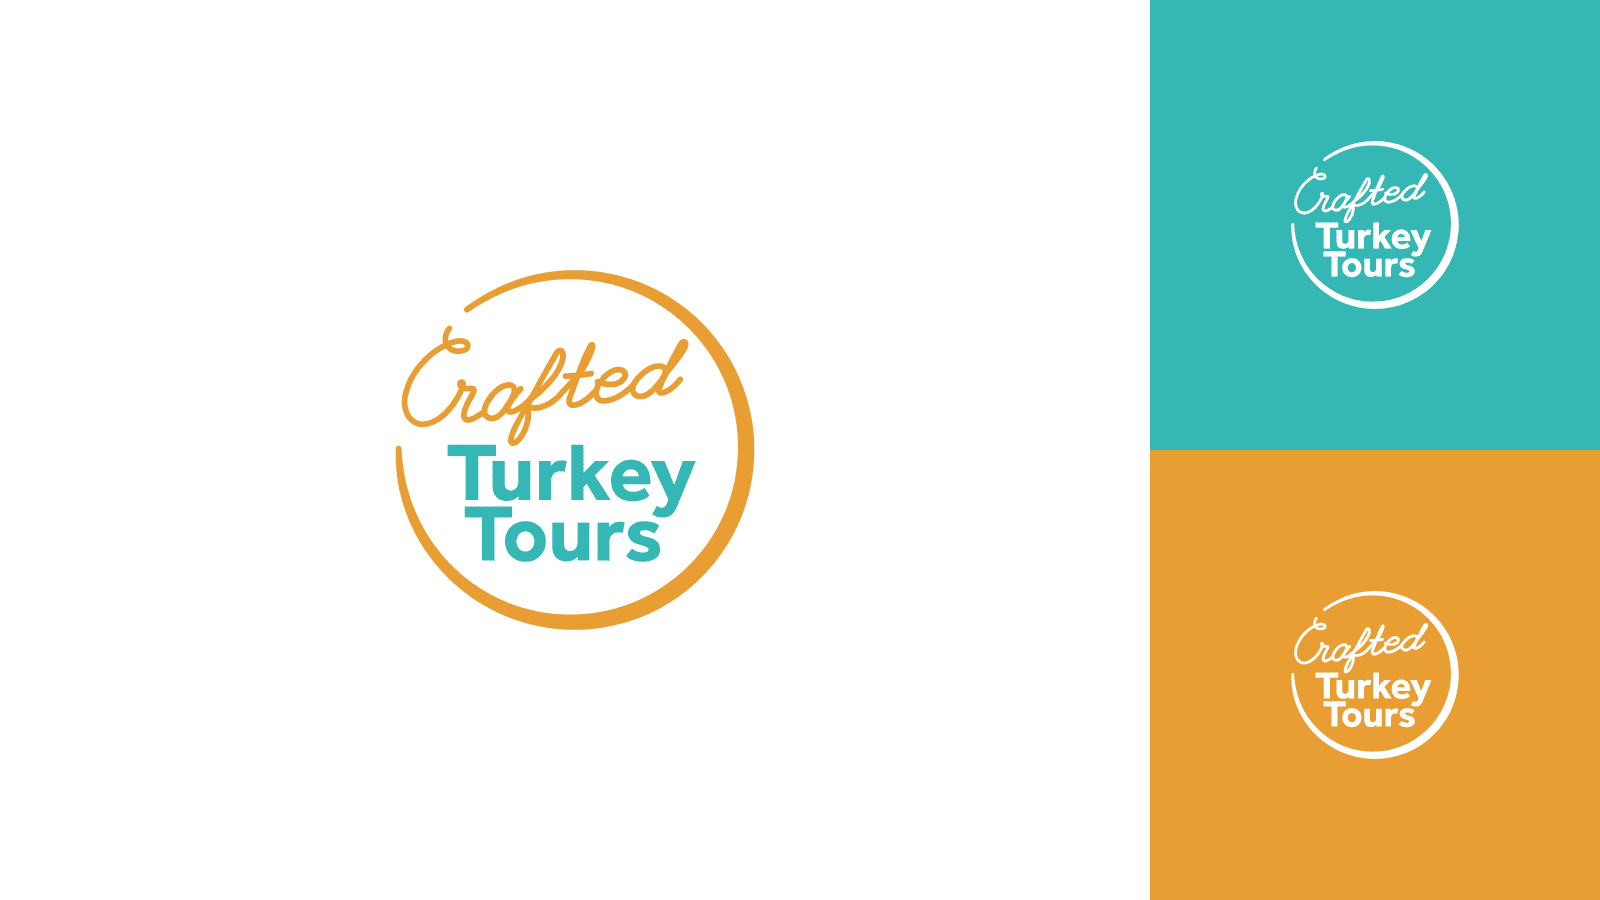 Crafted Turkey Tours, Niffob, reklam ajansı, dijital ajans, Gürkan Bayındır, Branding & Identity<br>Digital Consulting<br>Web Site UX/UI<br>Social Campaigns<br>...